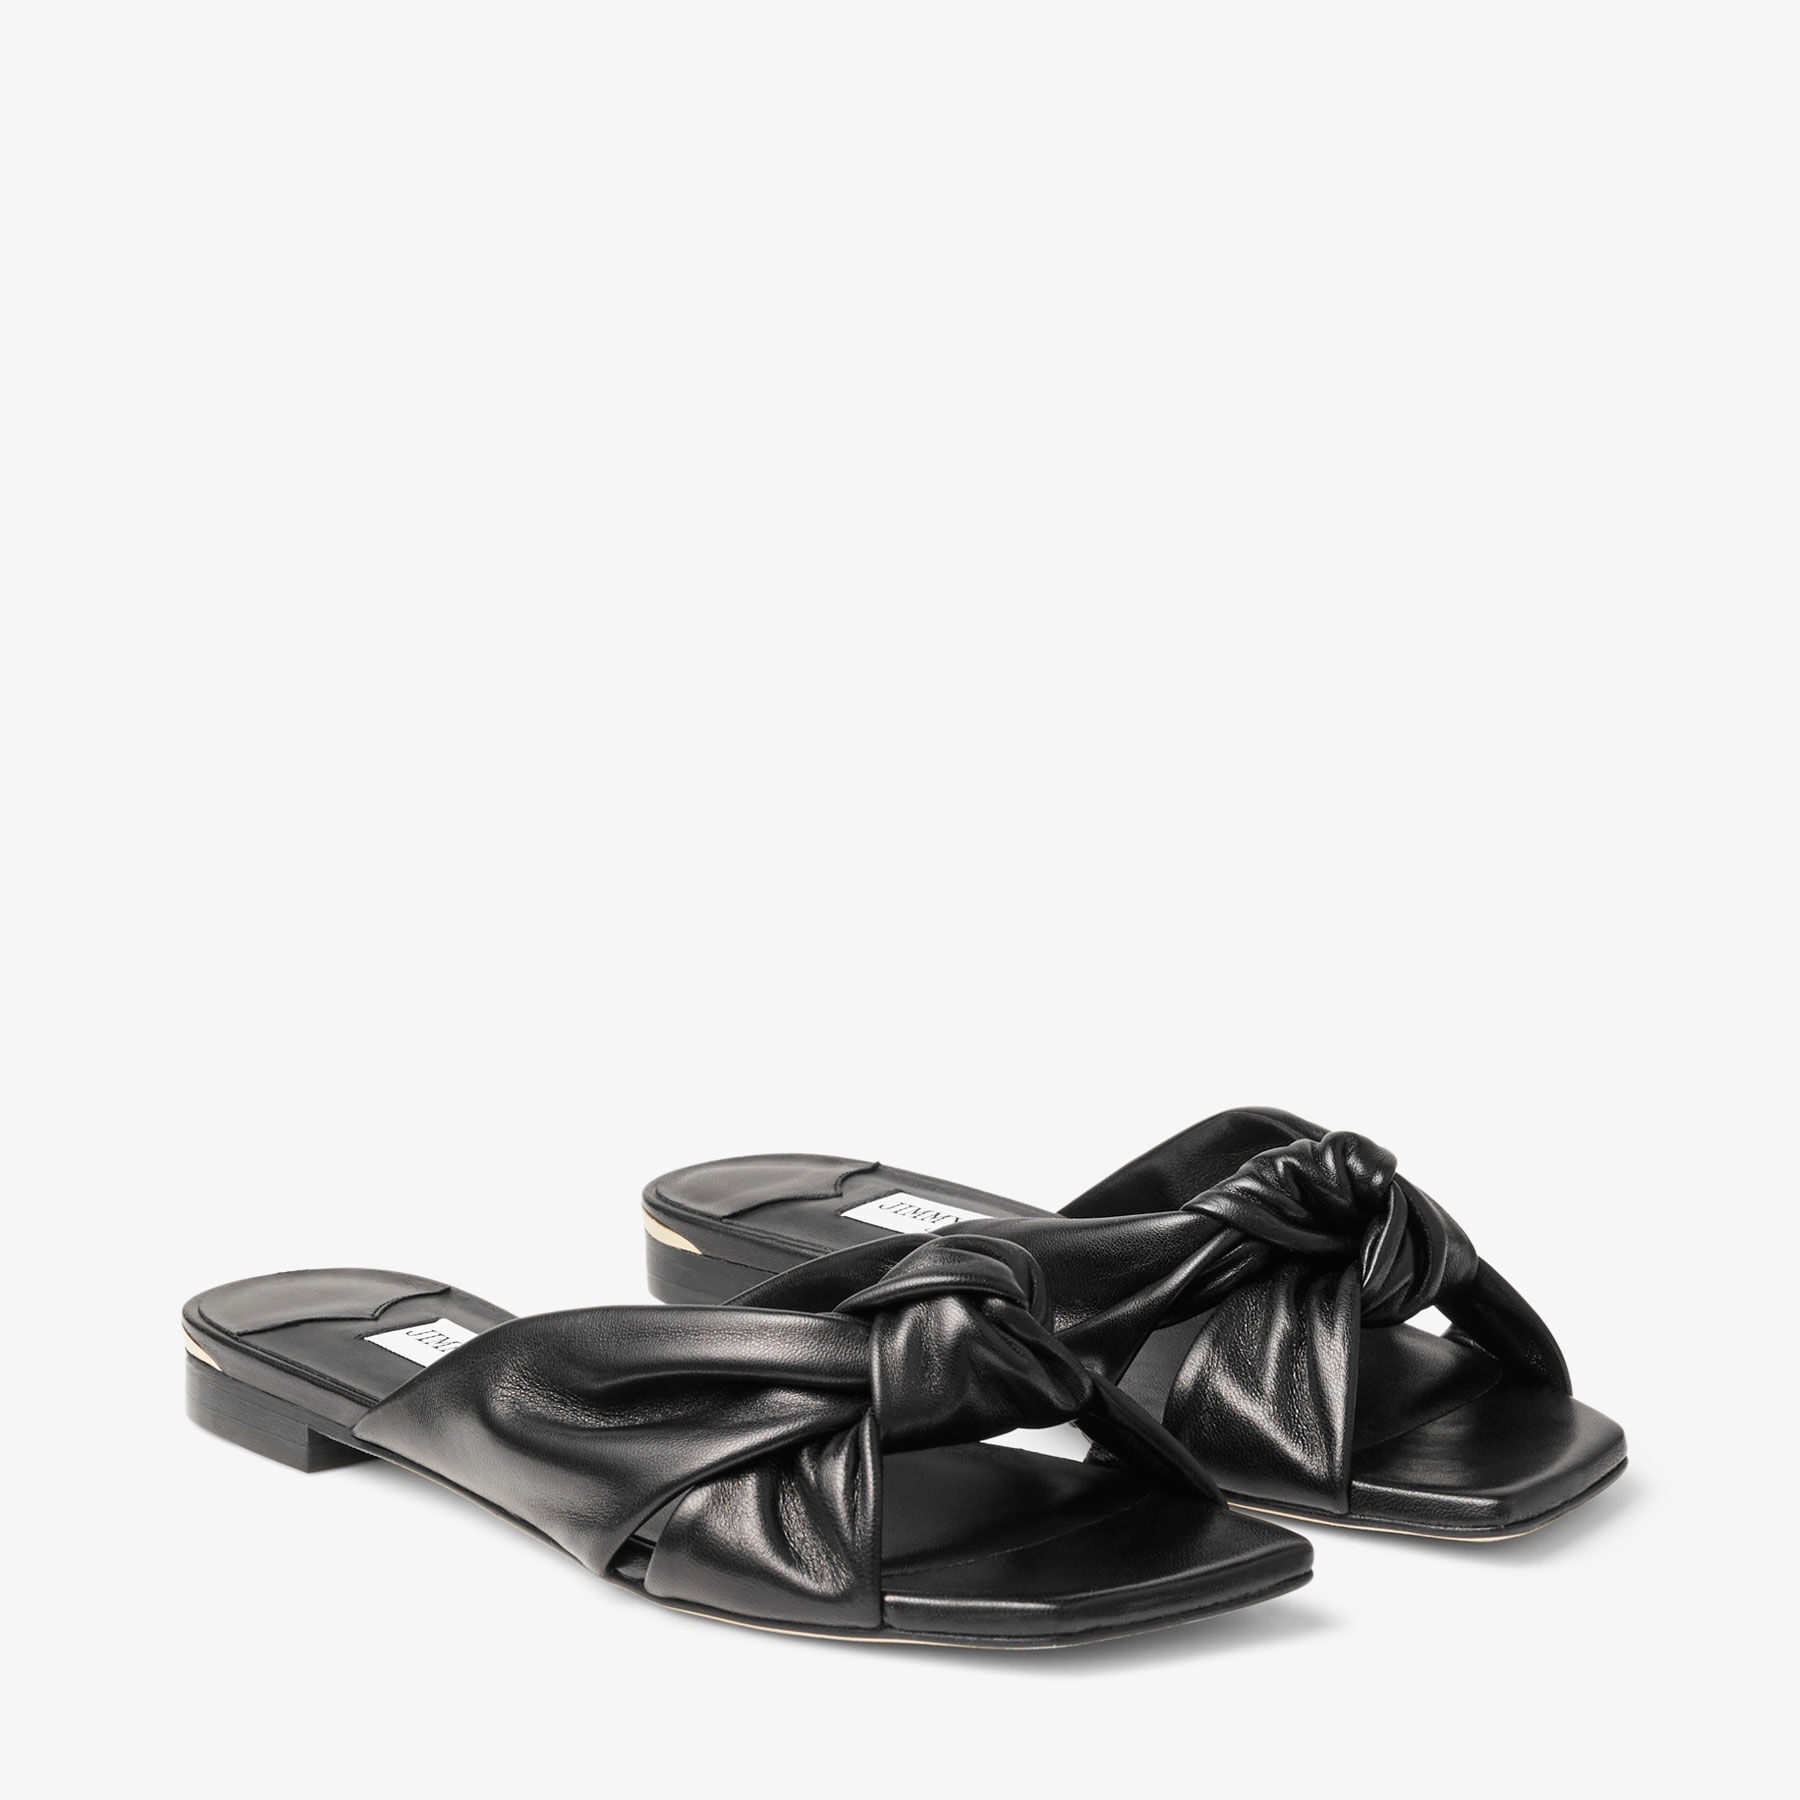 Avenue Flat
Black Nappa Leather Flat Sandals - 2